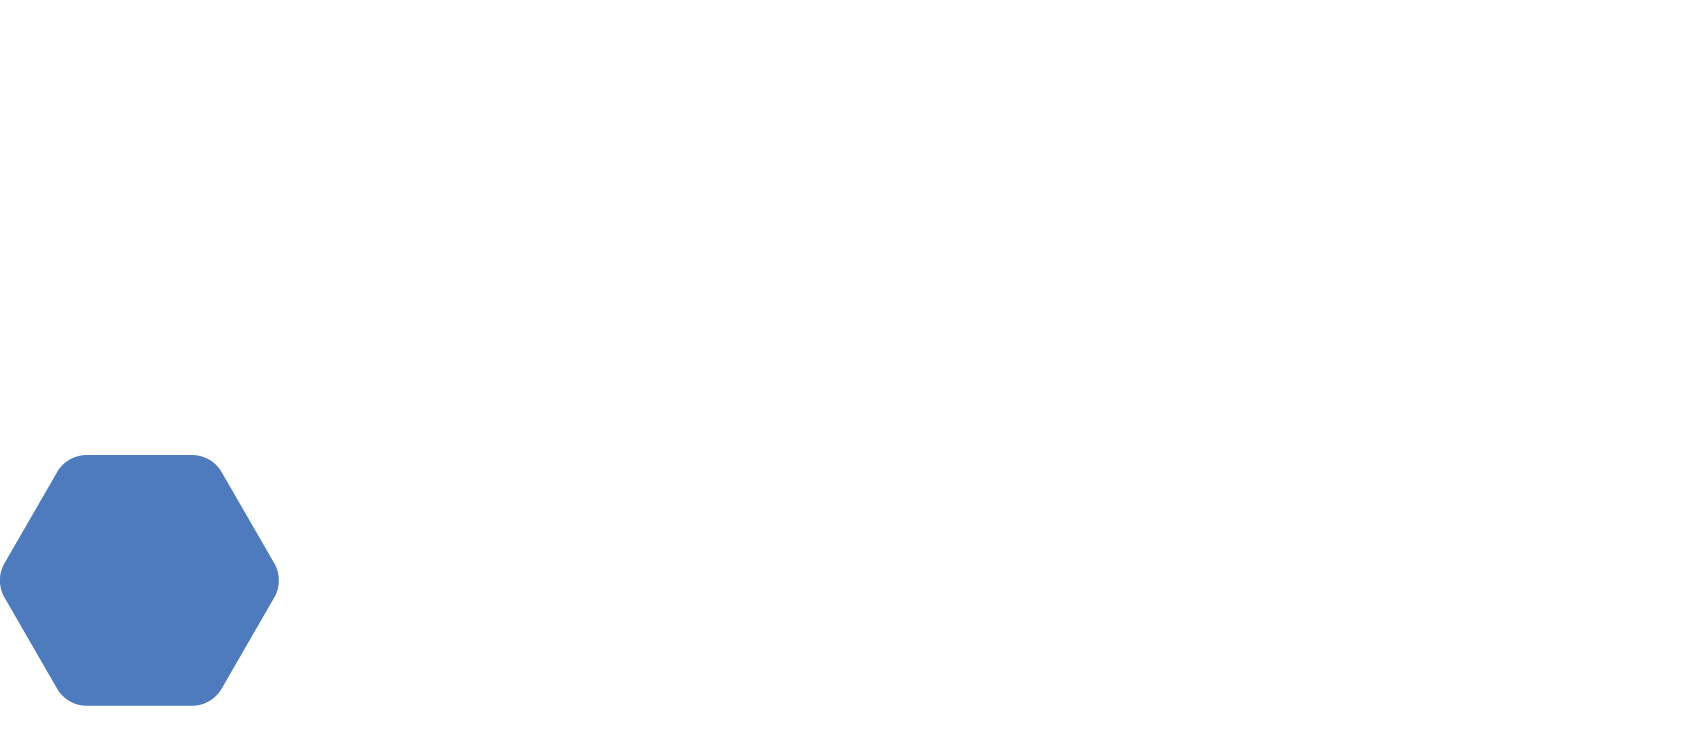 DotC Studios horizontal logo in white